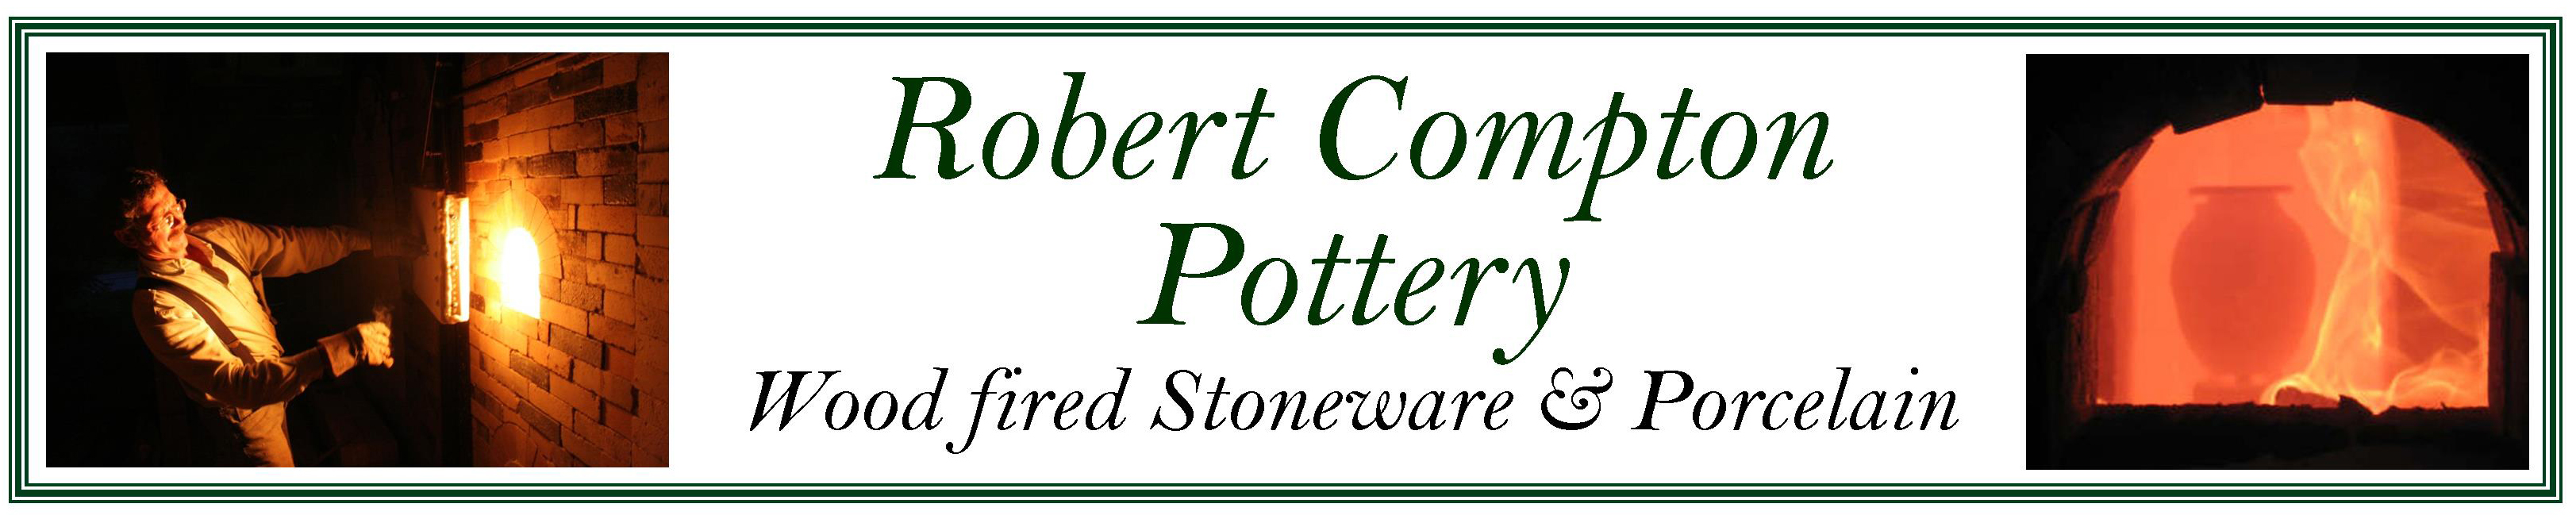 Robert Compton Pottery